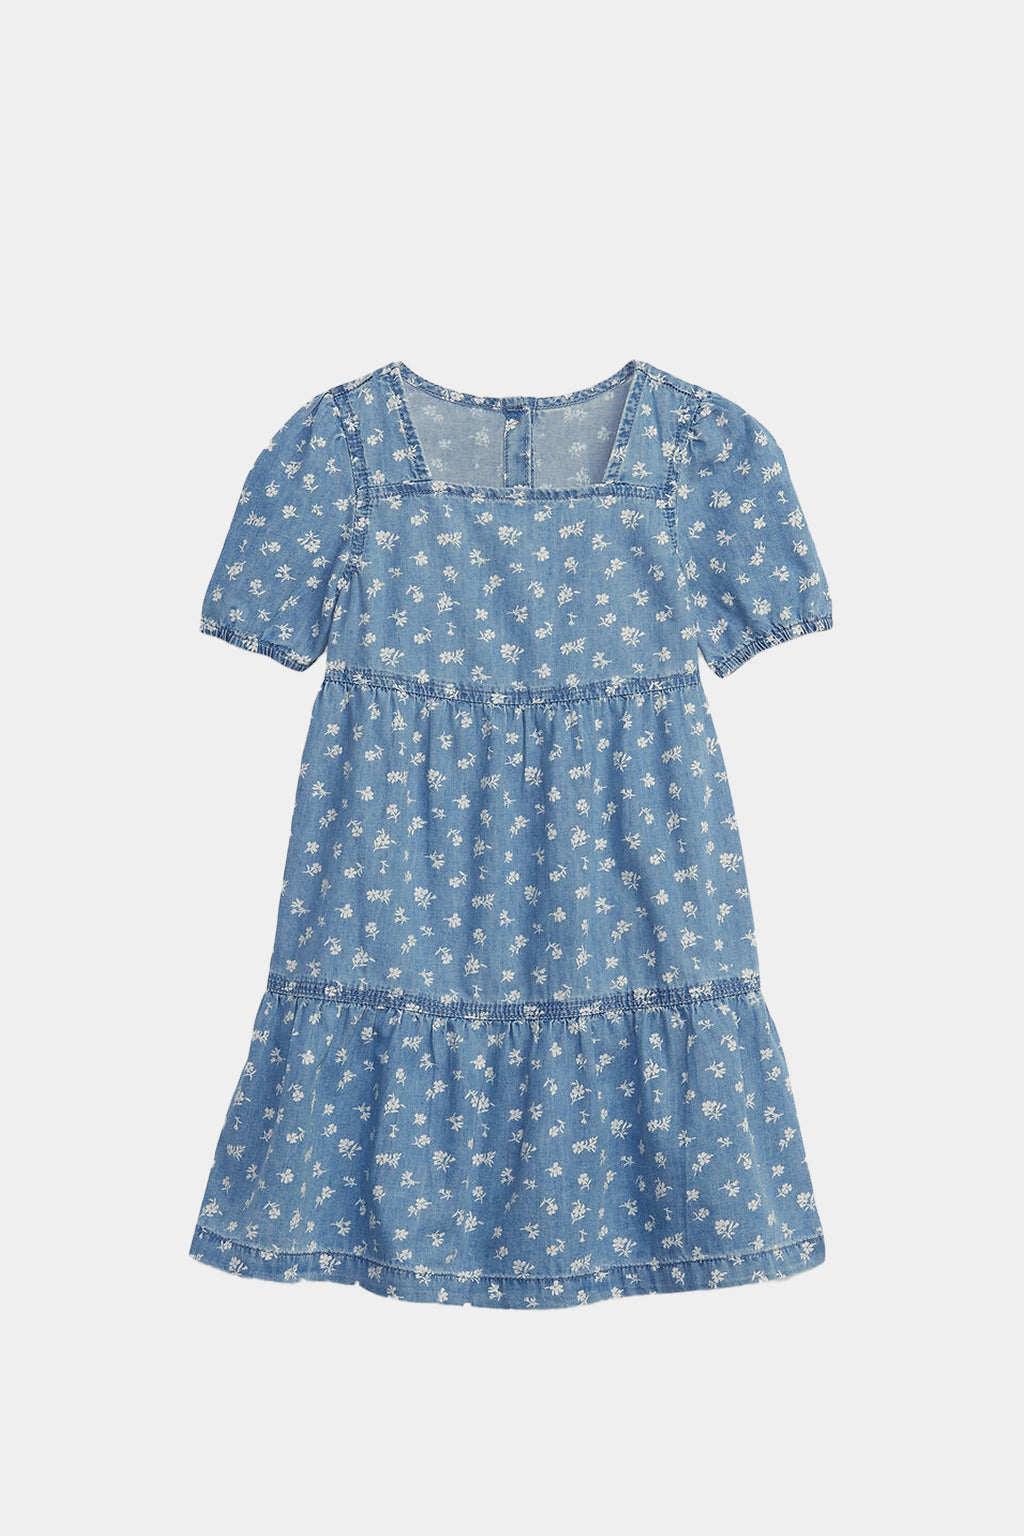 Gap - Toddler Floral Print Denim Dress